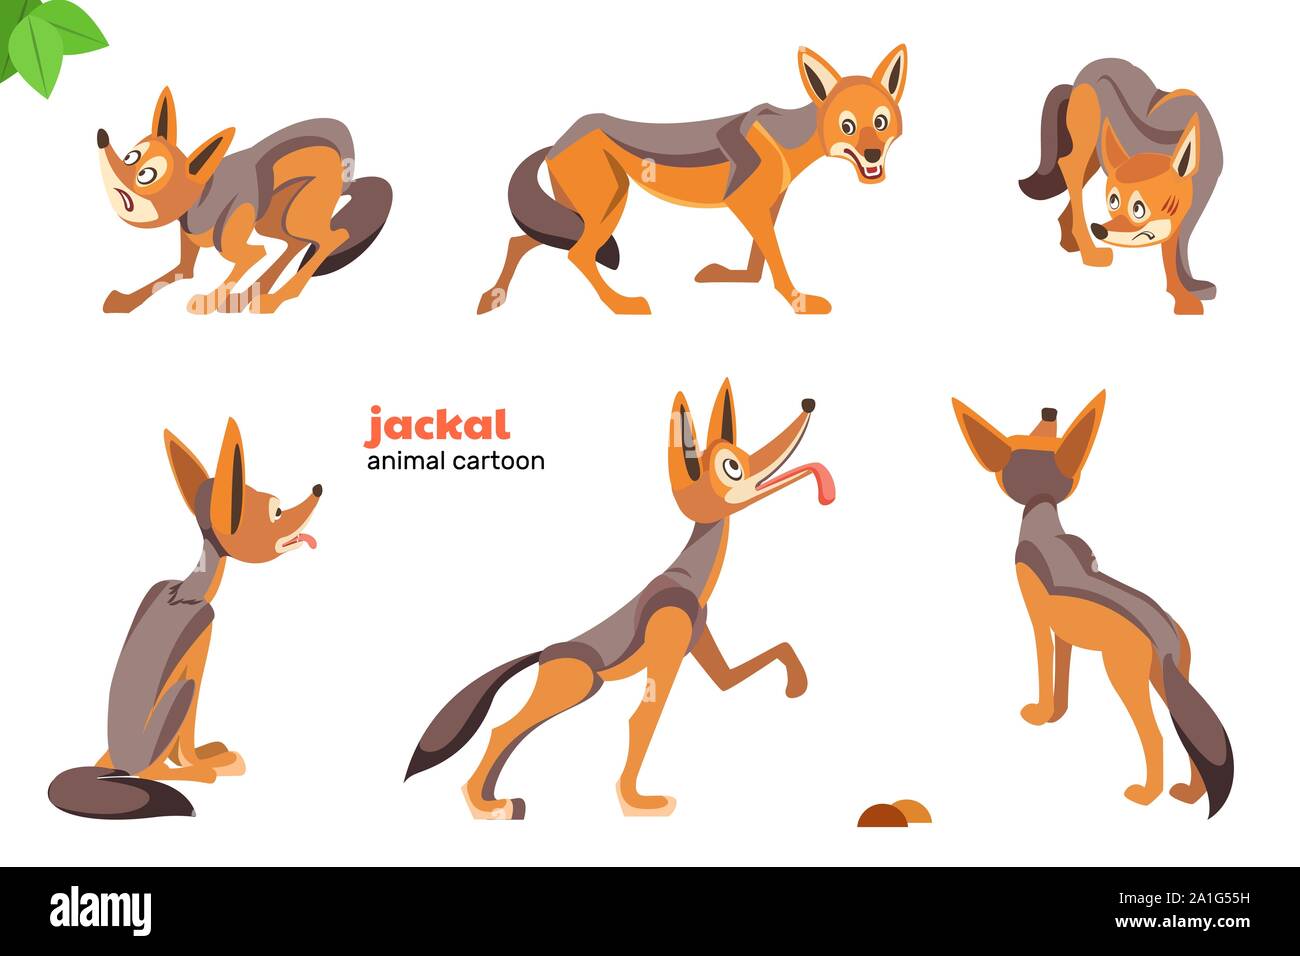 Jackal Cartoon Character Vector illustration. Set of cute cartoon characters. Stock Vector